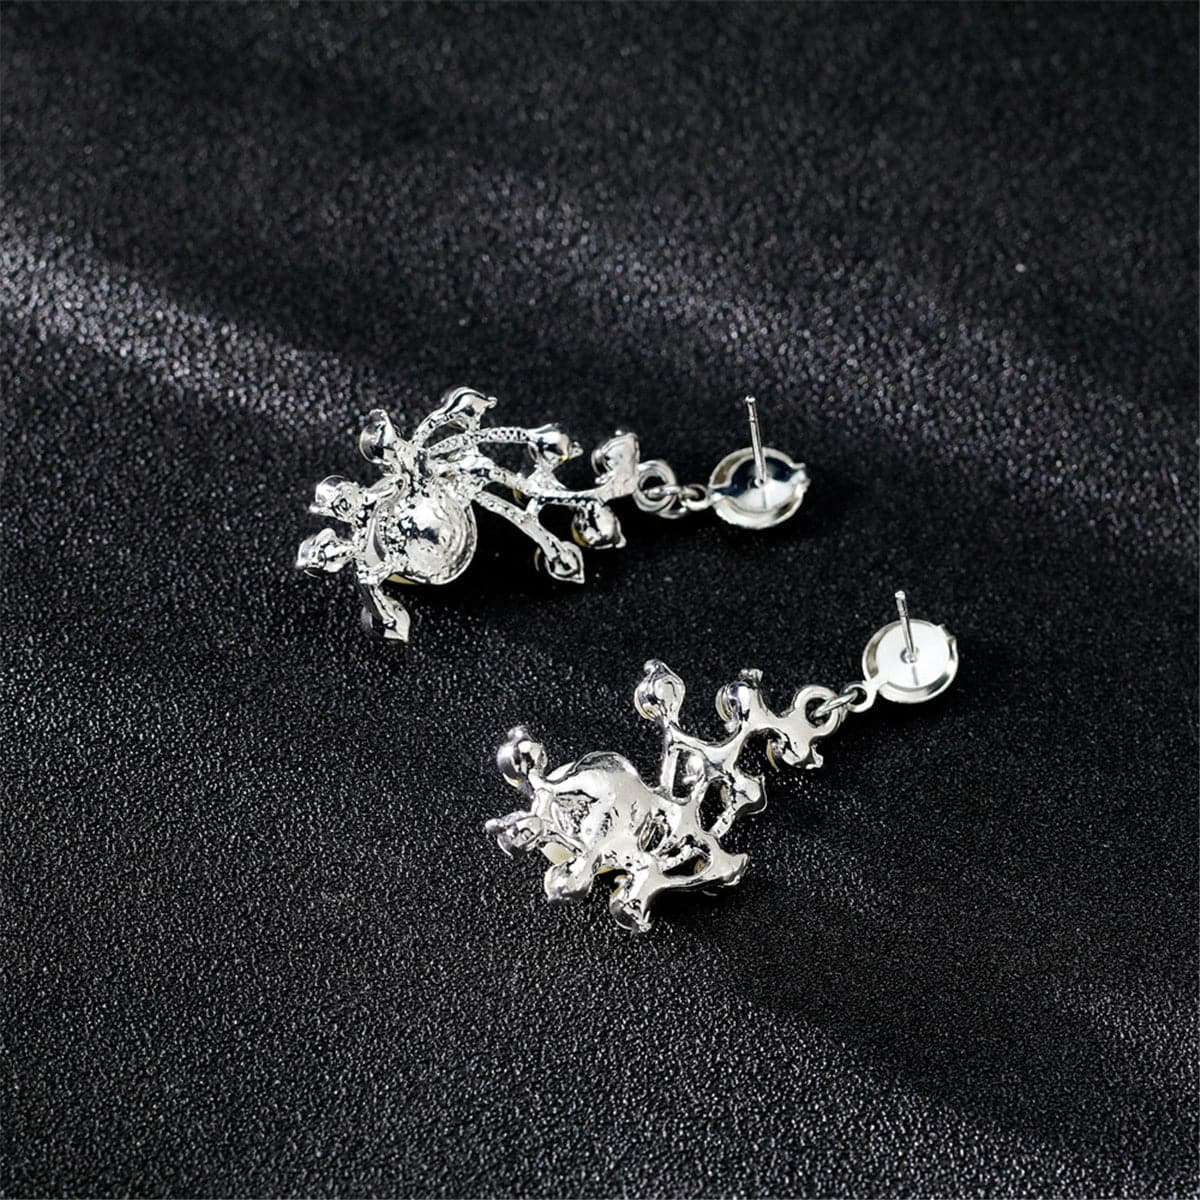 Pearl & Cubic Zirconia Branch Statement Necklace Set